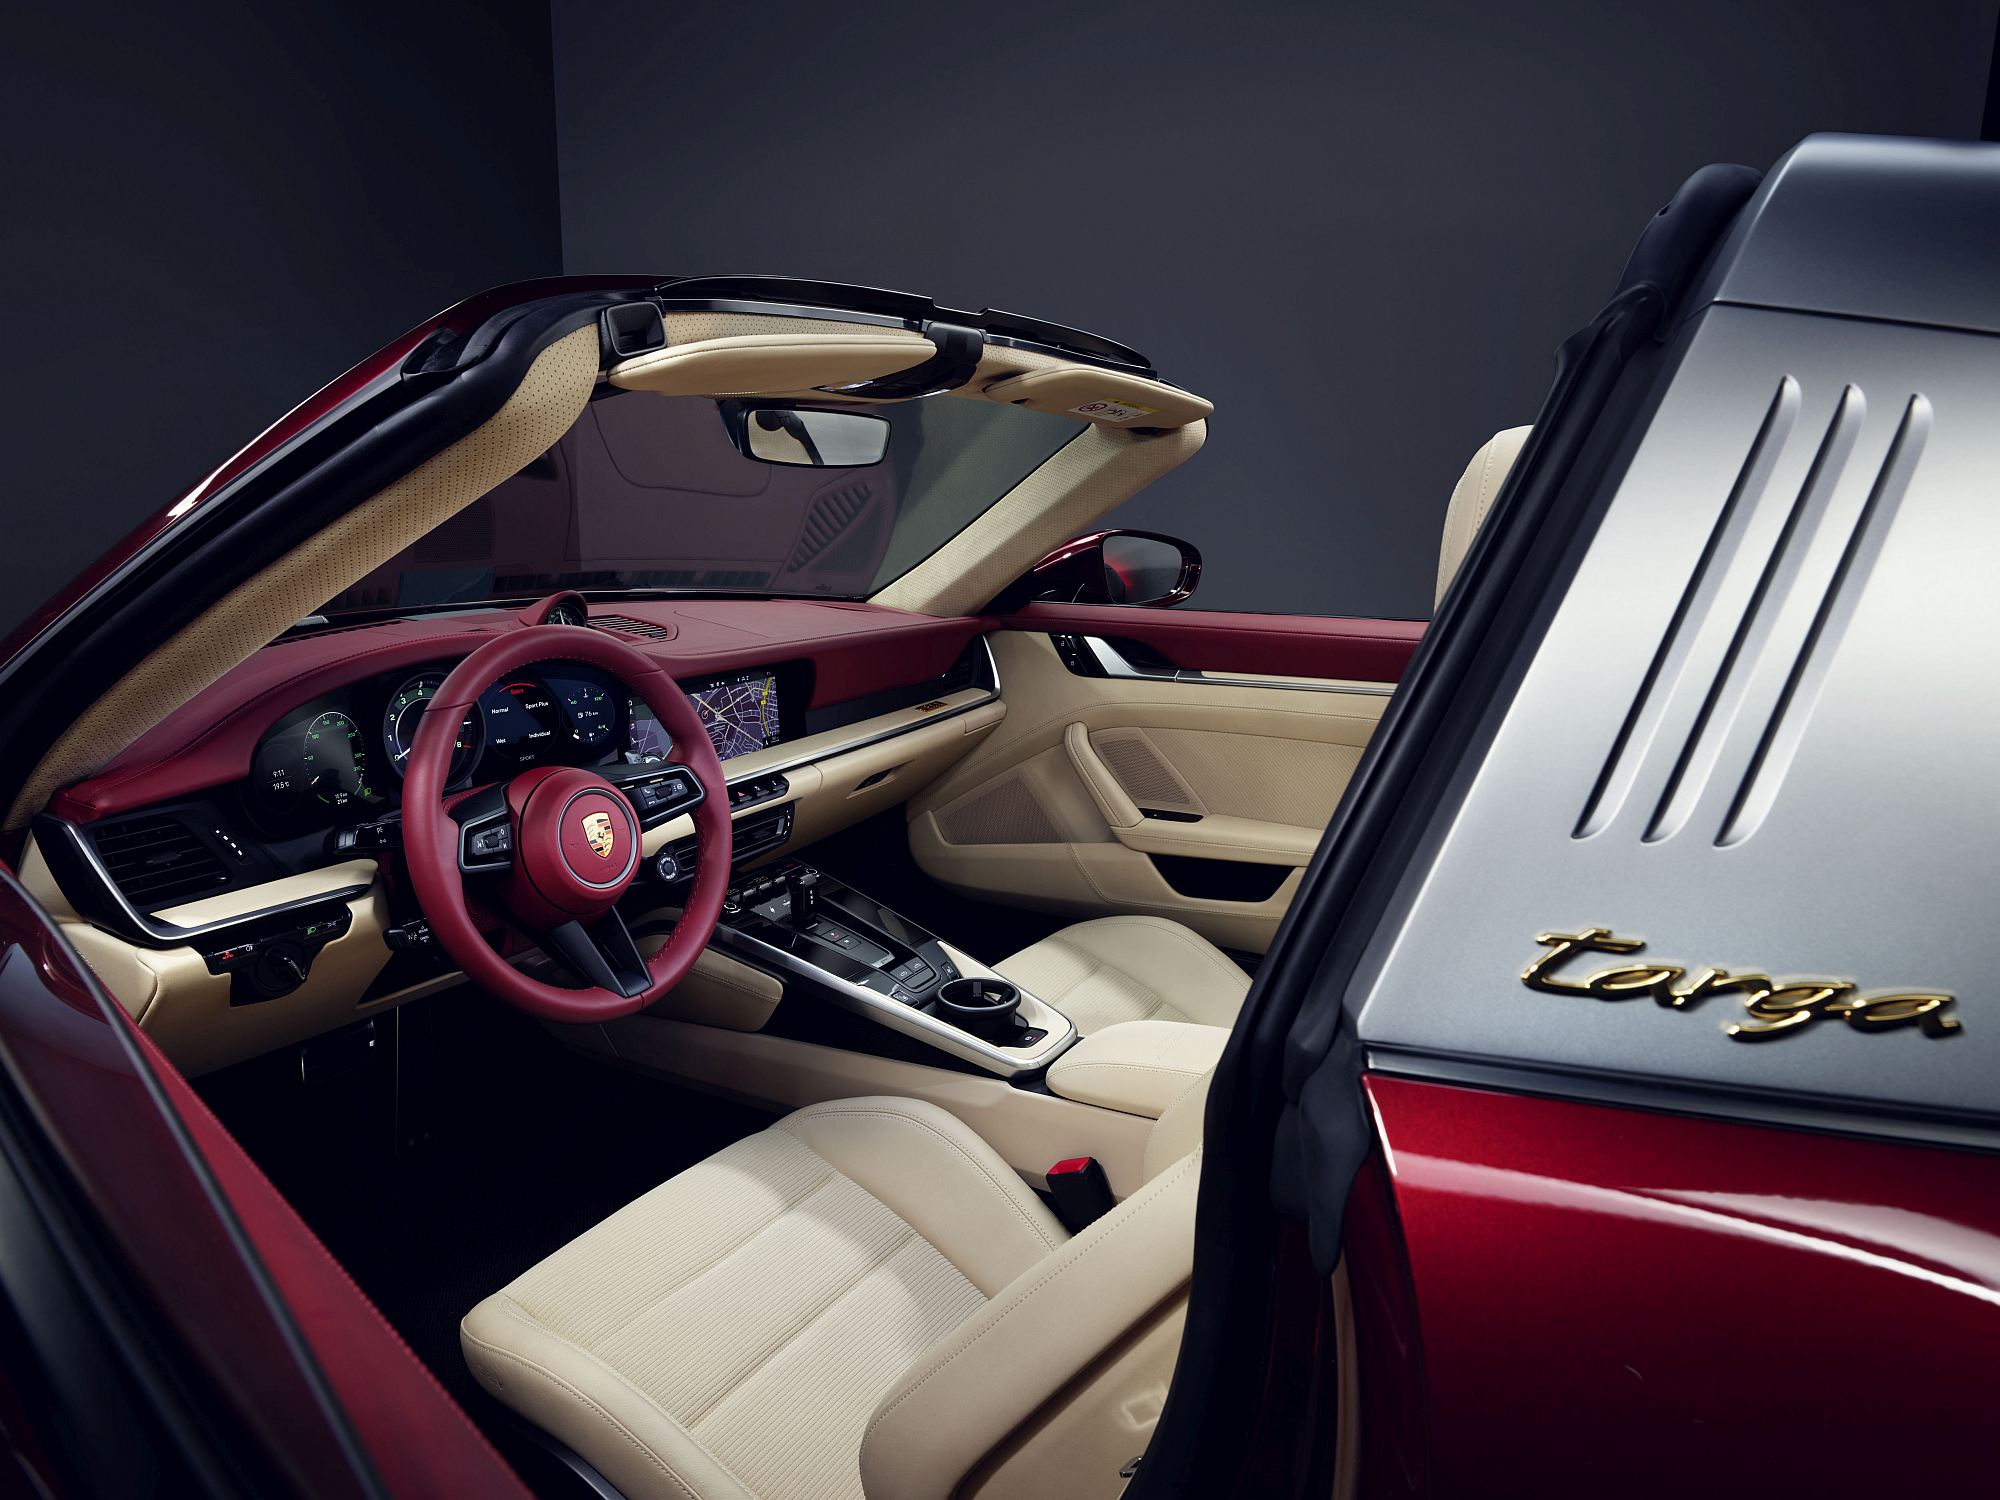 Porsche 911 Targa 4S Heritage Design 2020 (5)